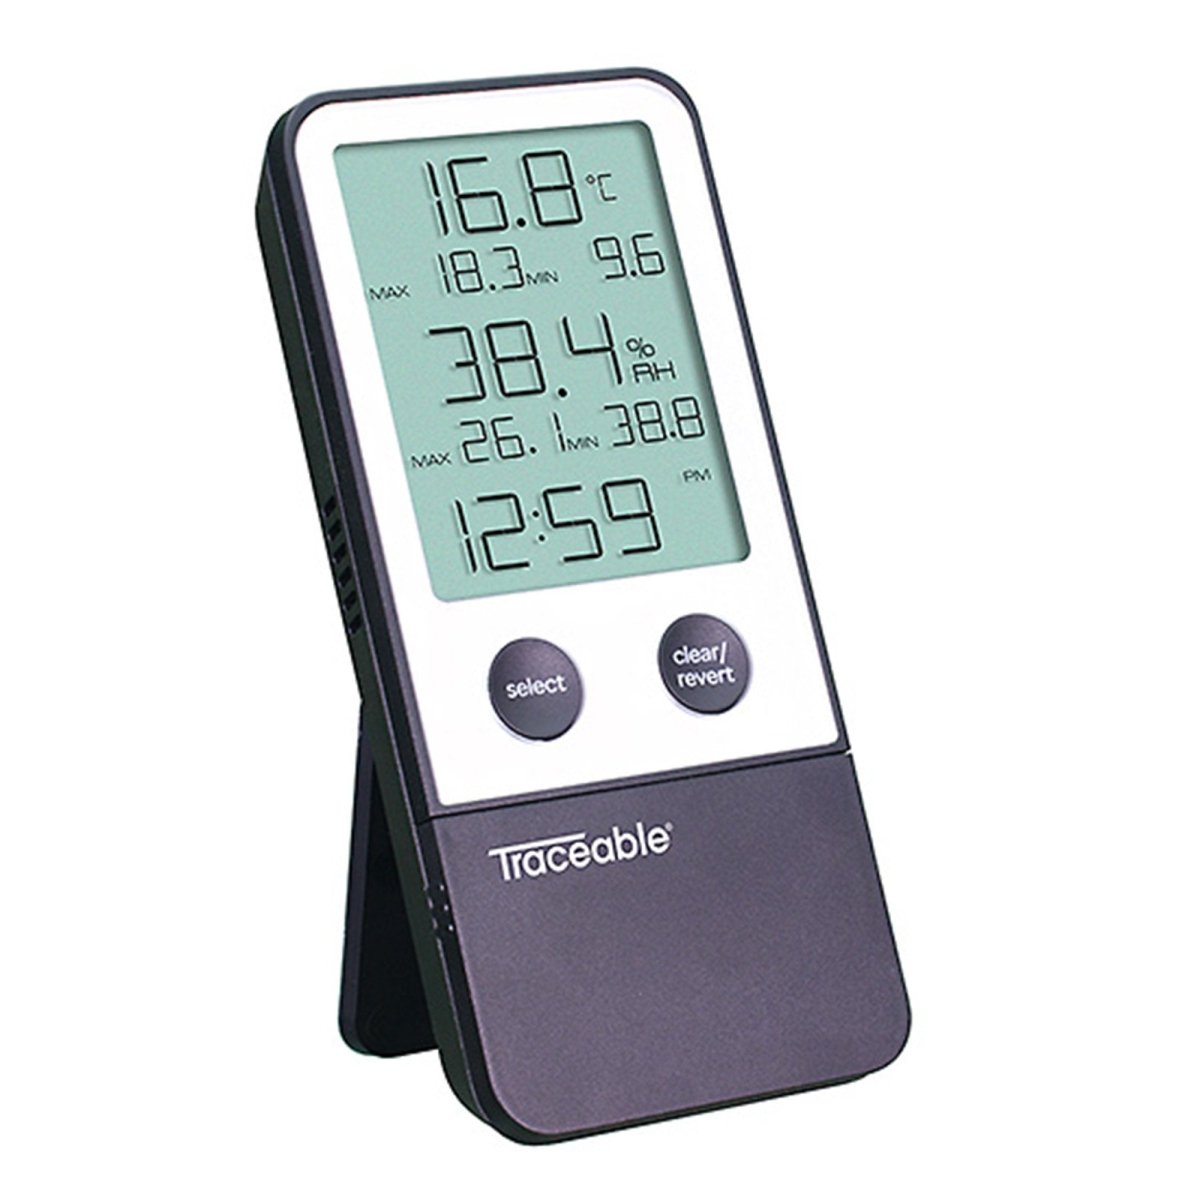 McKesson Entrust Digital Oral Thermometer